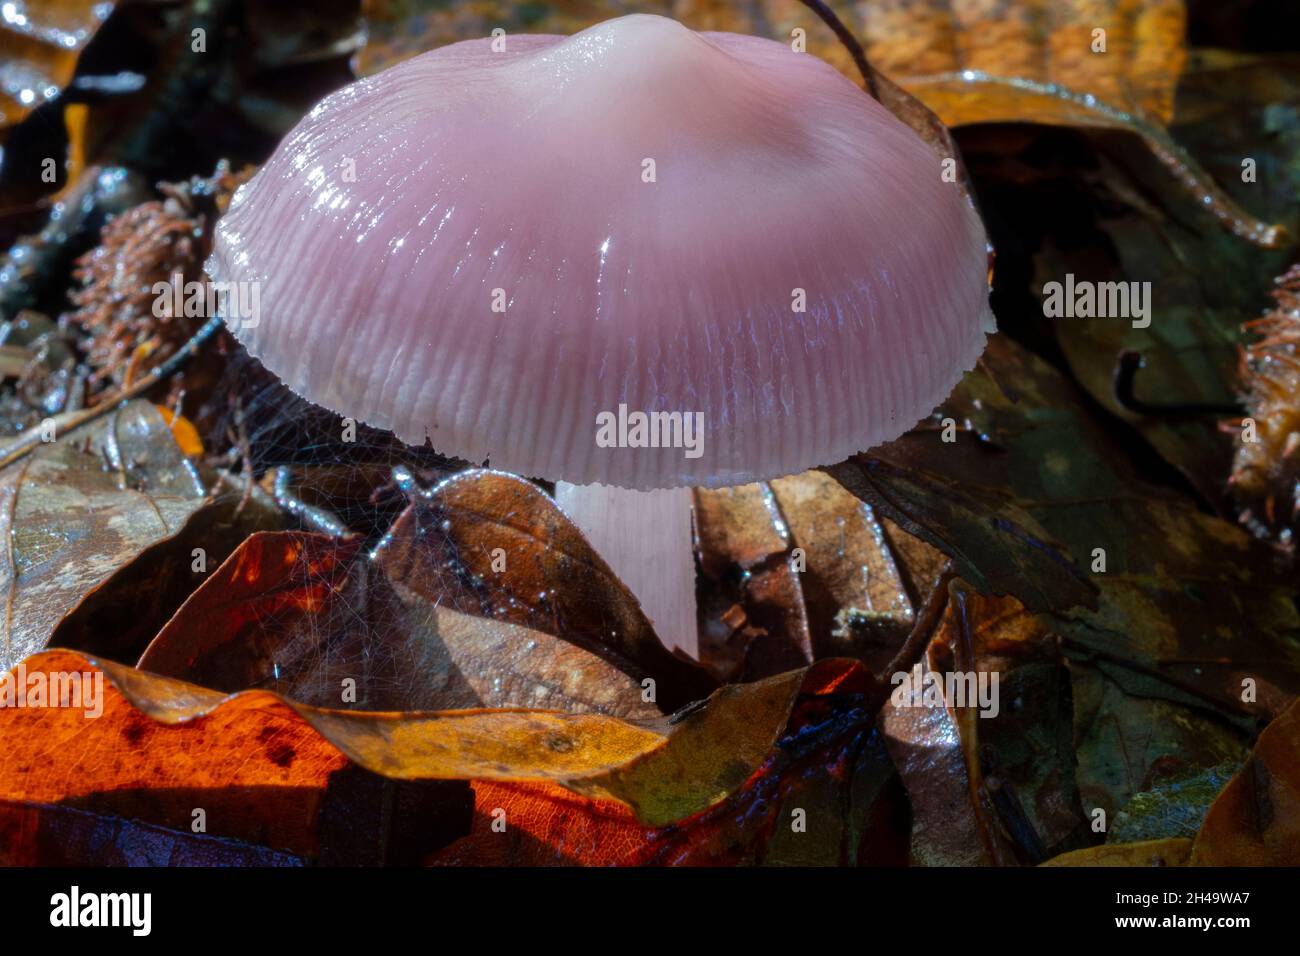 Rosy Bonnet mushrooms on a woodland floor Stock Photo